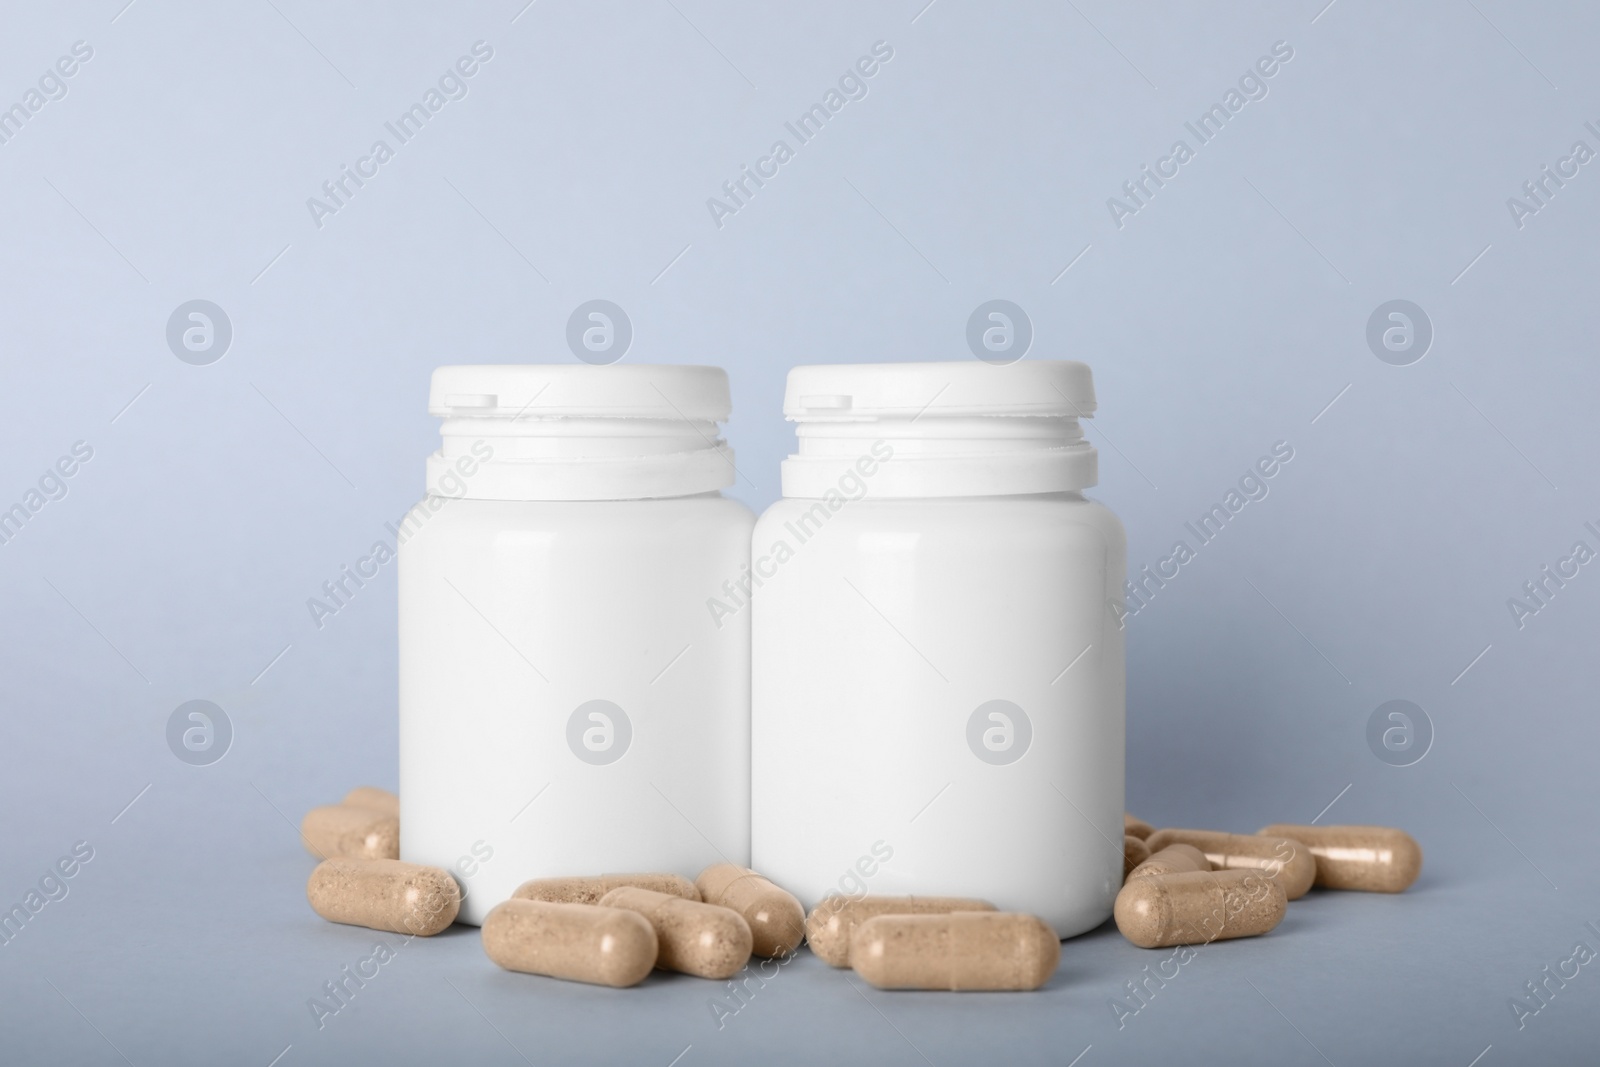 Photo of Gelatin capsules and bottles on light grey background